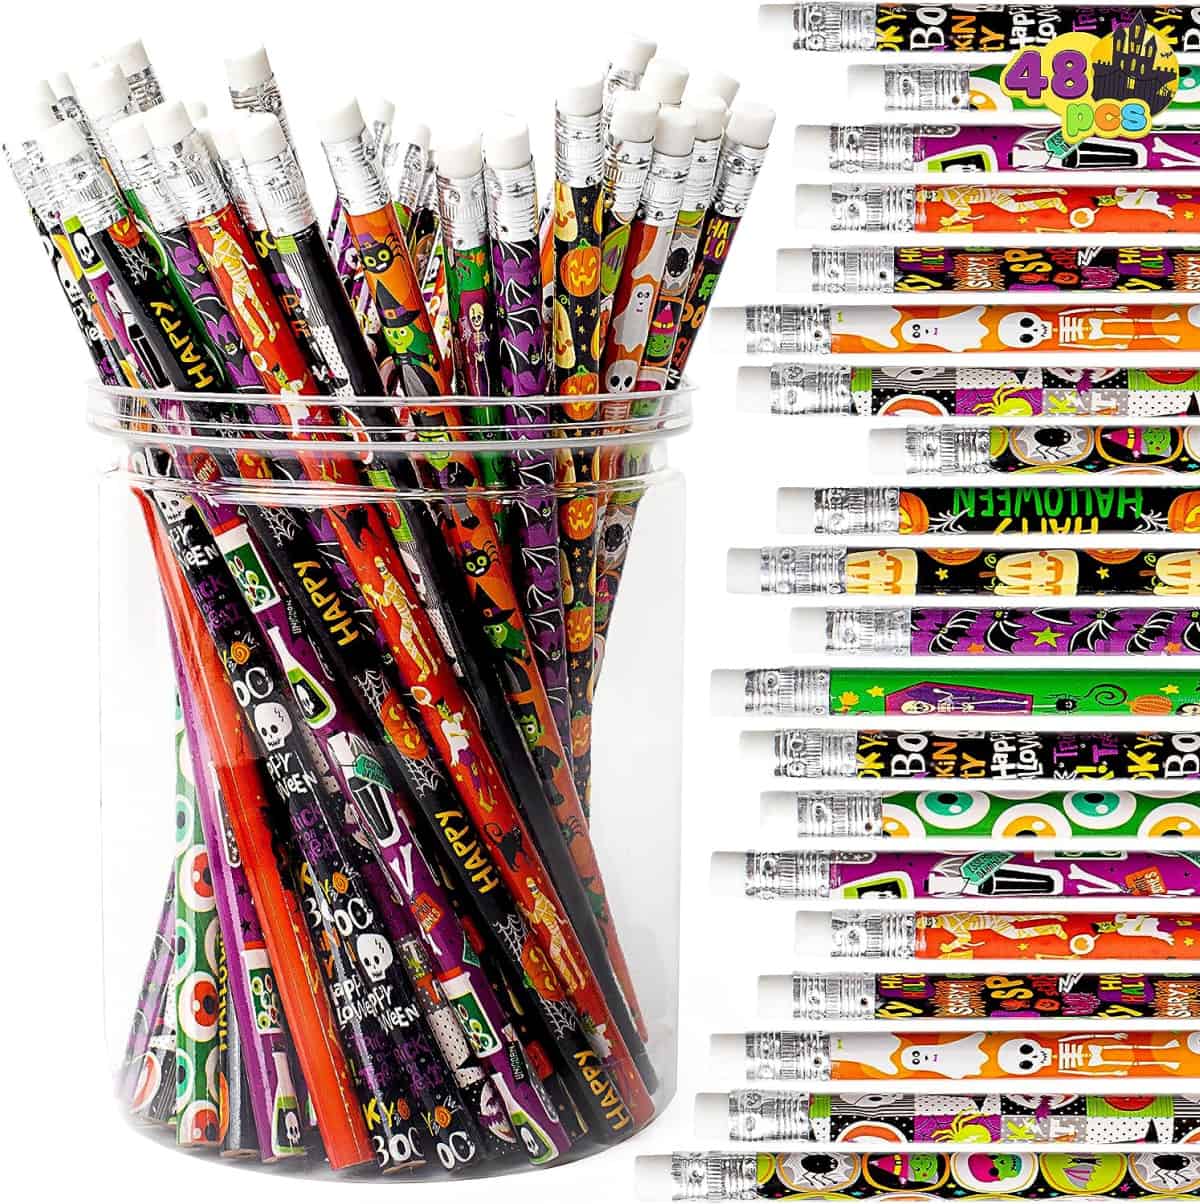 pencils for a festive halloween activity book